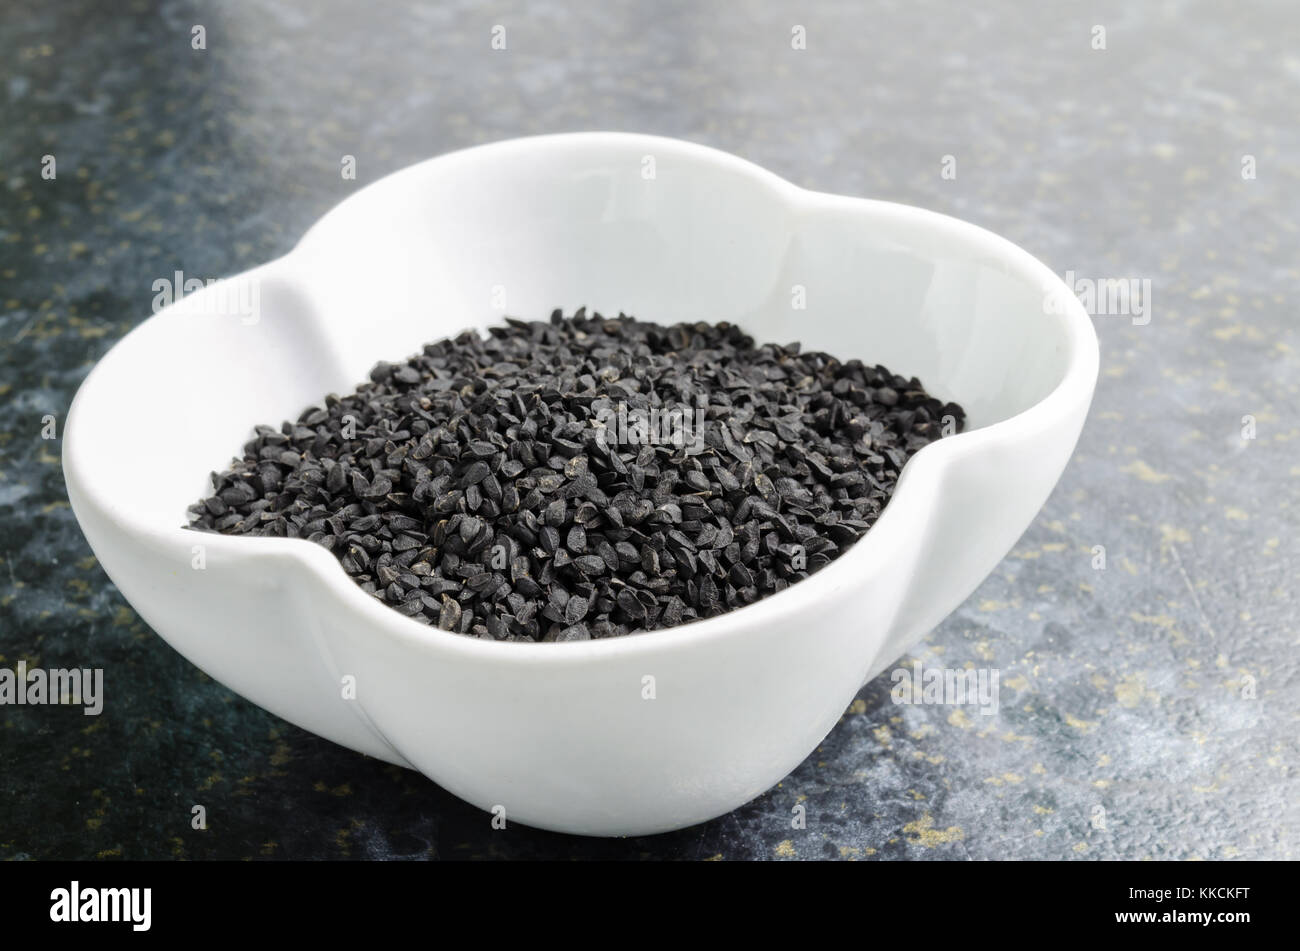 Black Onion Seeds (Nigella Sativa) in a White Bowl Stock Photo